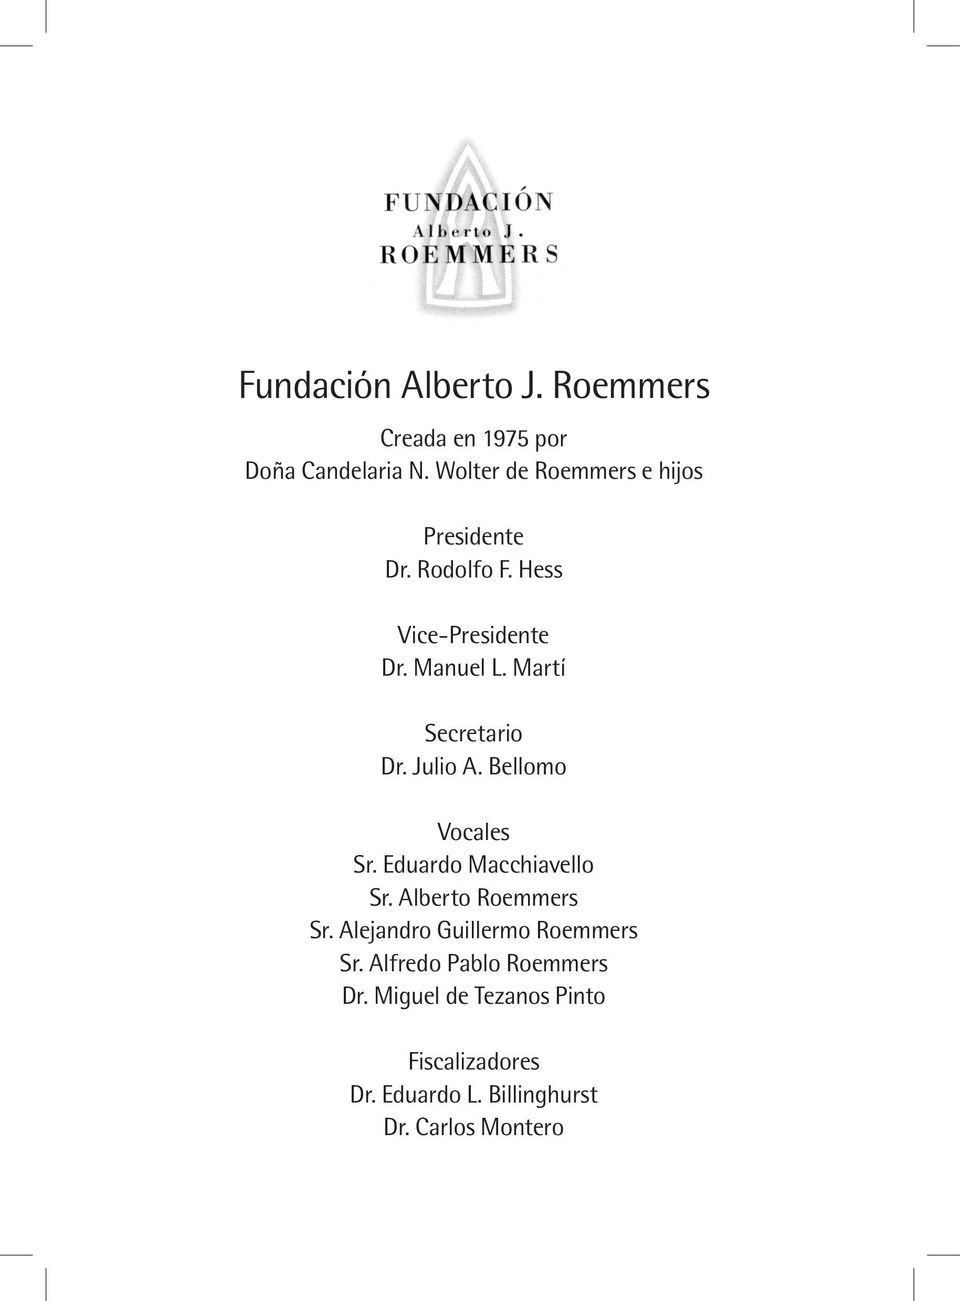 Martí Secretario Dr. Julio A. Bellomo Vocales Sr. Eduardo Macchiavello Sr. Alberto Roemmers Sr.